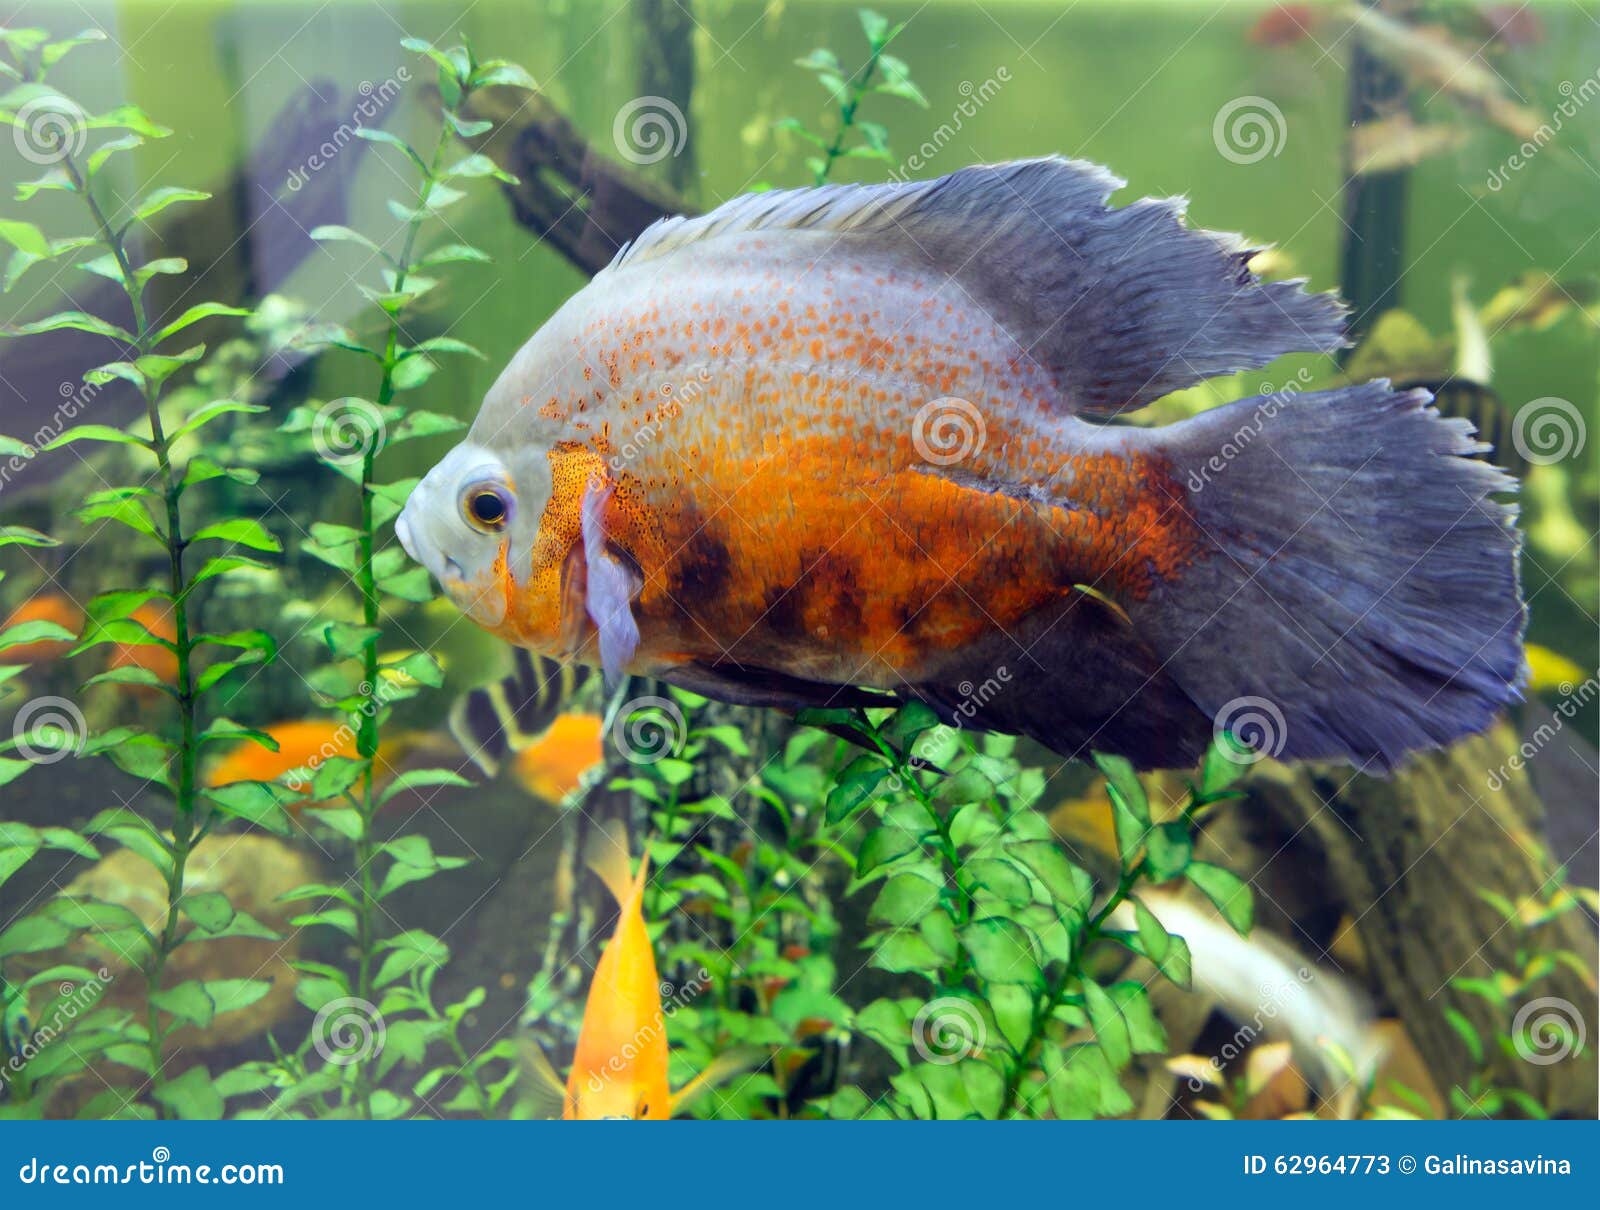 Aquarium fish. stock image. Image of animal, tropical - 62964773